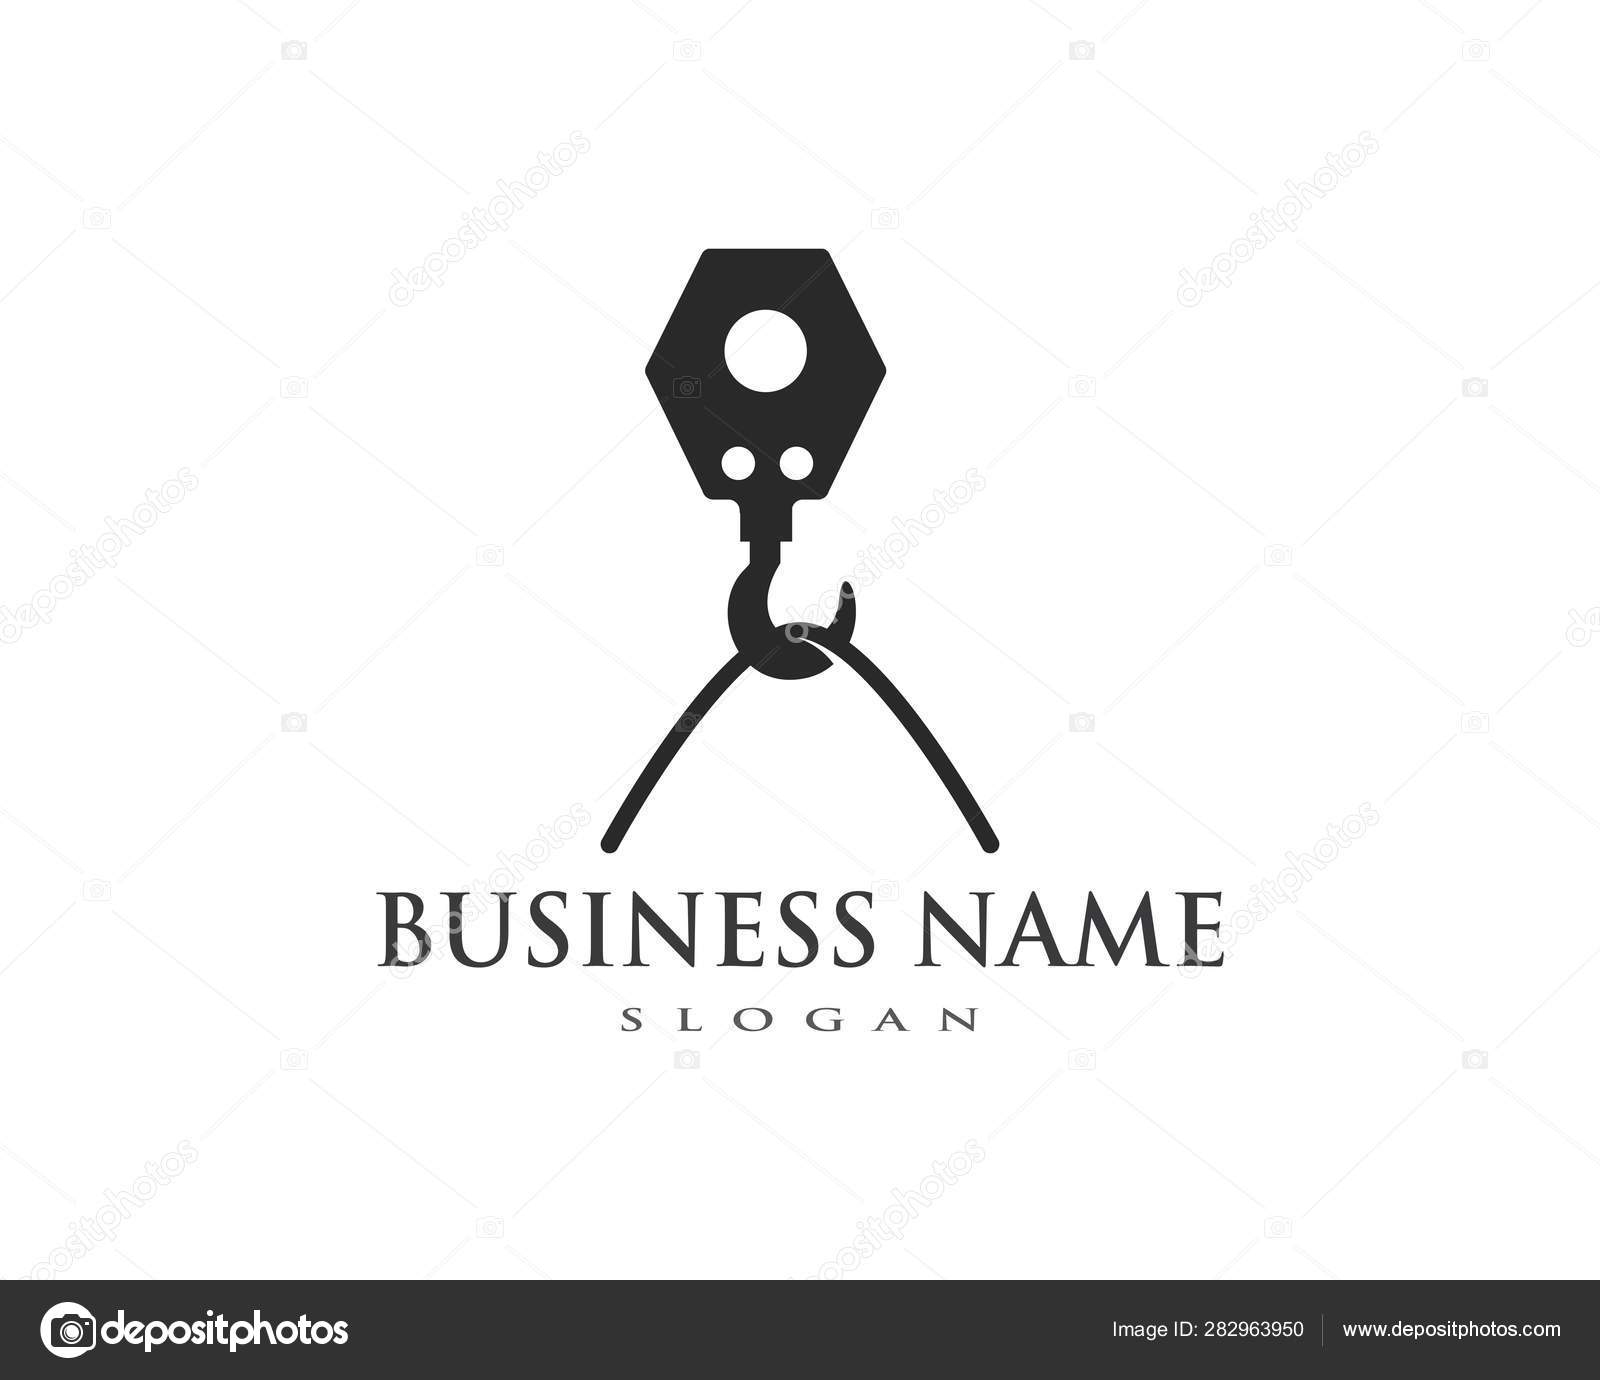 https://st4.depositphotos.com/25790974/28296/v/1600/depositphotos_282963950-stock-illustration-crane-hook-logo-vector.jpg